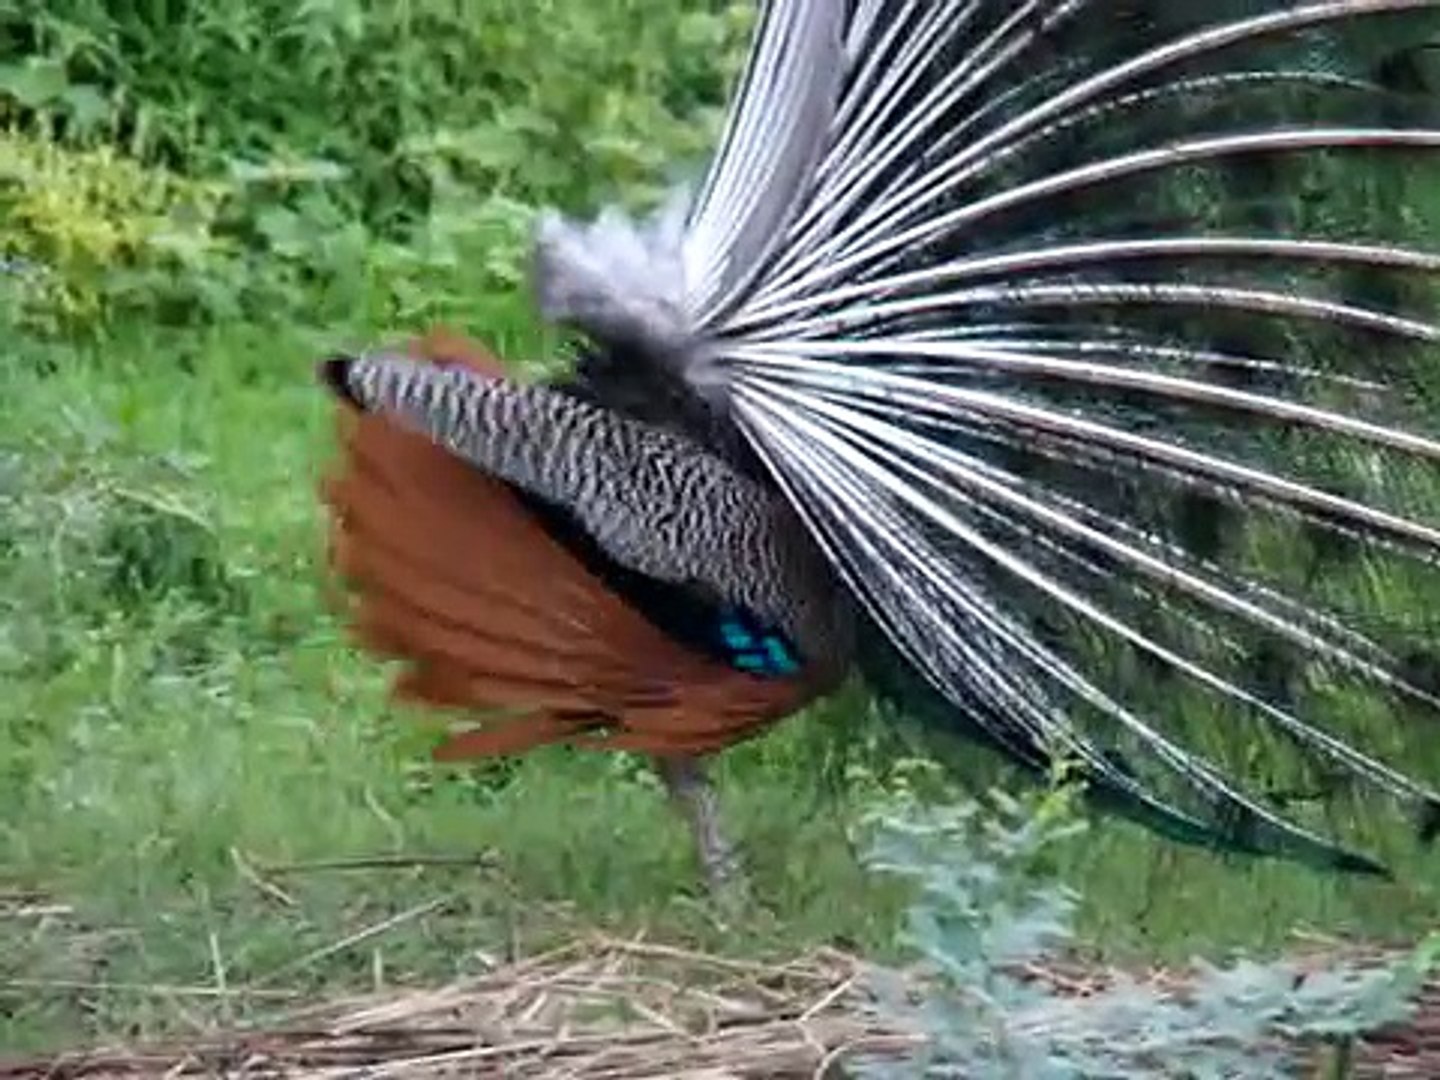 Dancing Peacock in the Monsoons!